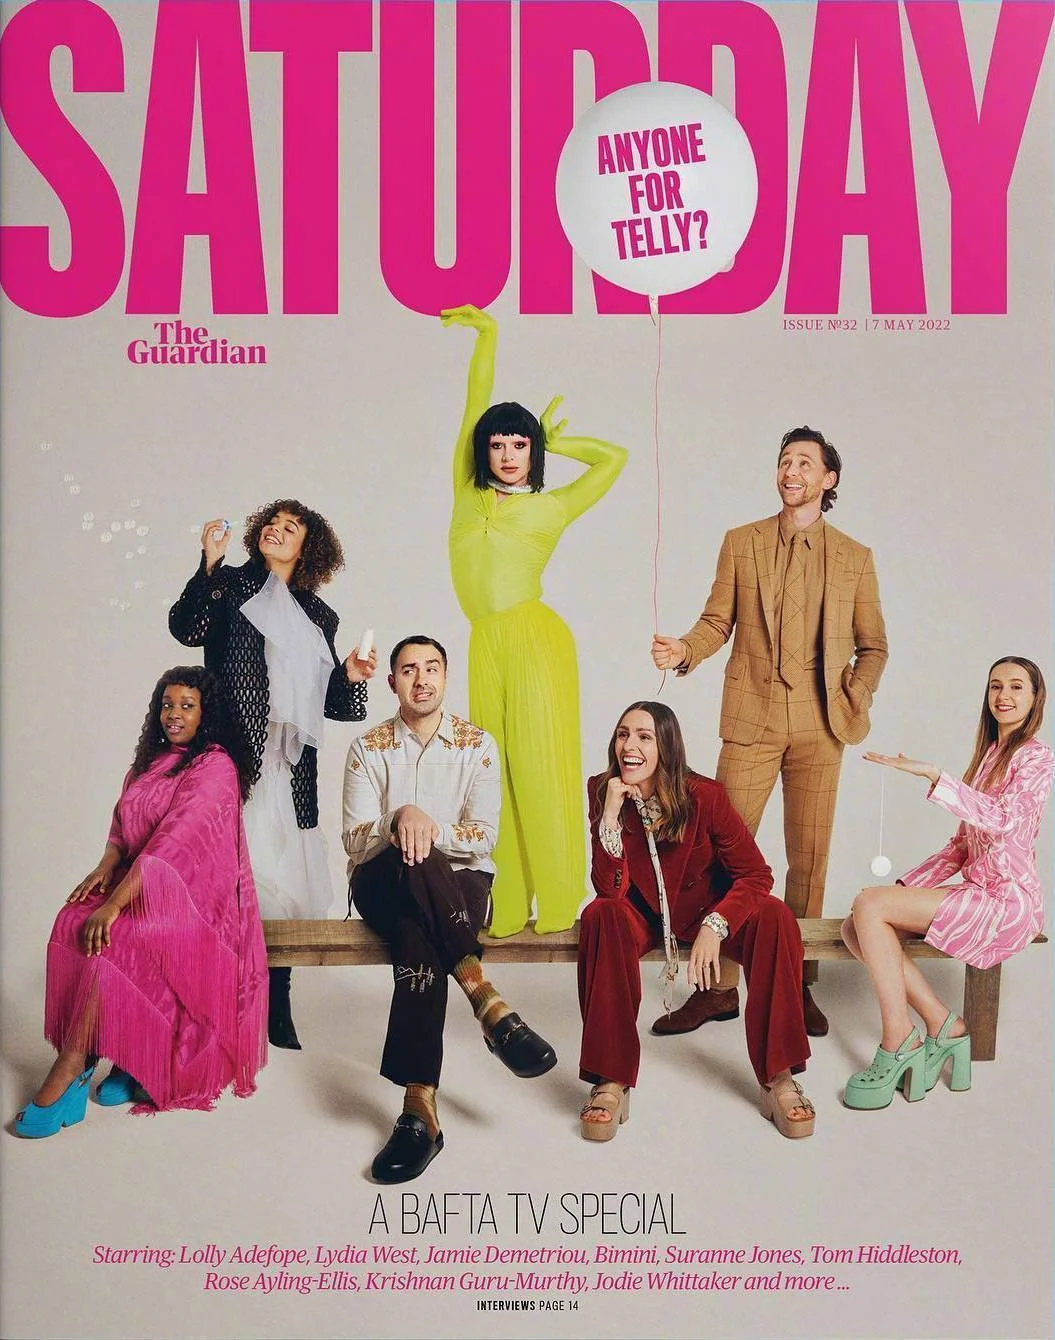 Tom Hiddleston, May photo of "Saturday" magazine ​​​